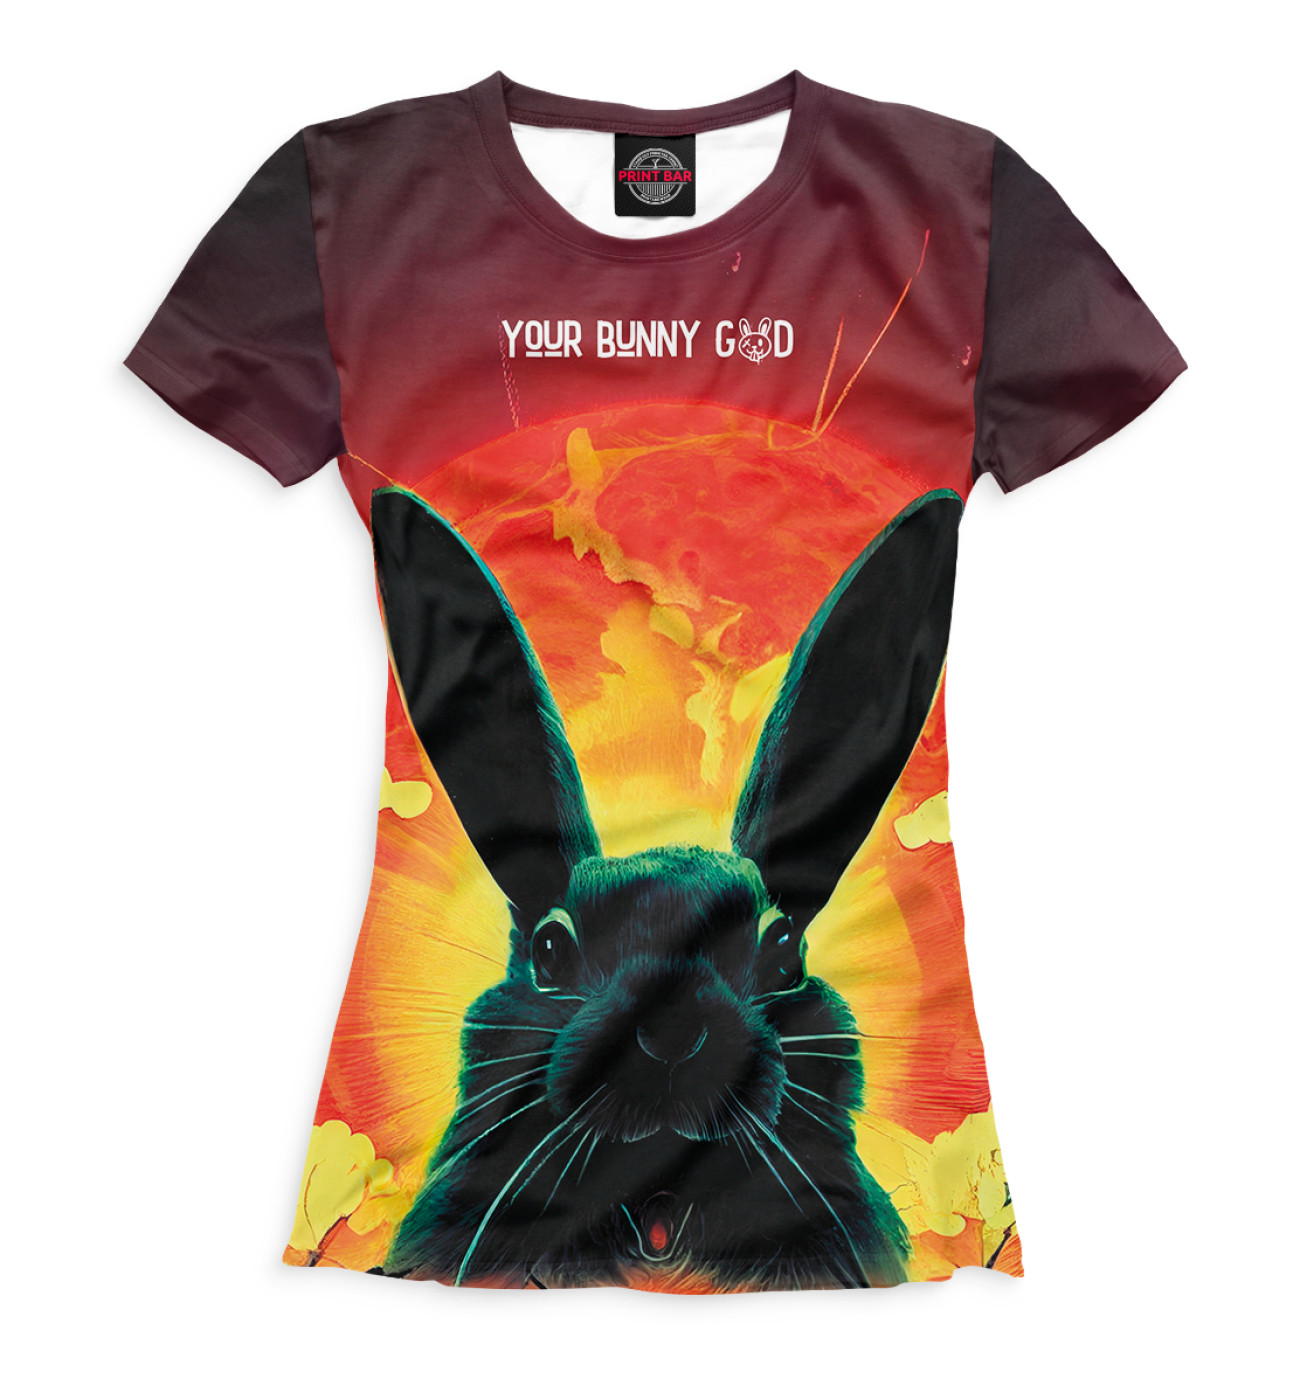 Женская Футболка Your bunny god, артикул: YOT-491428-fut-1